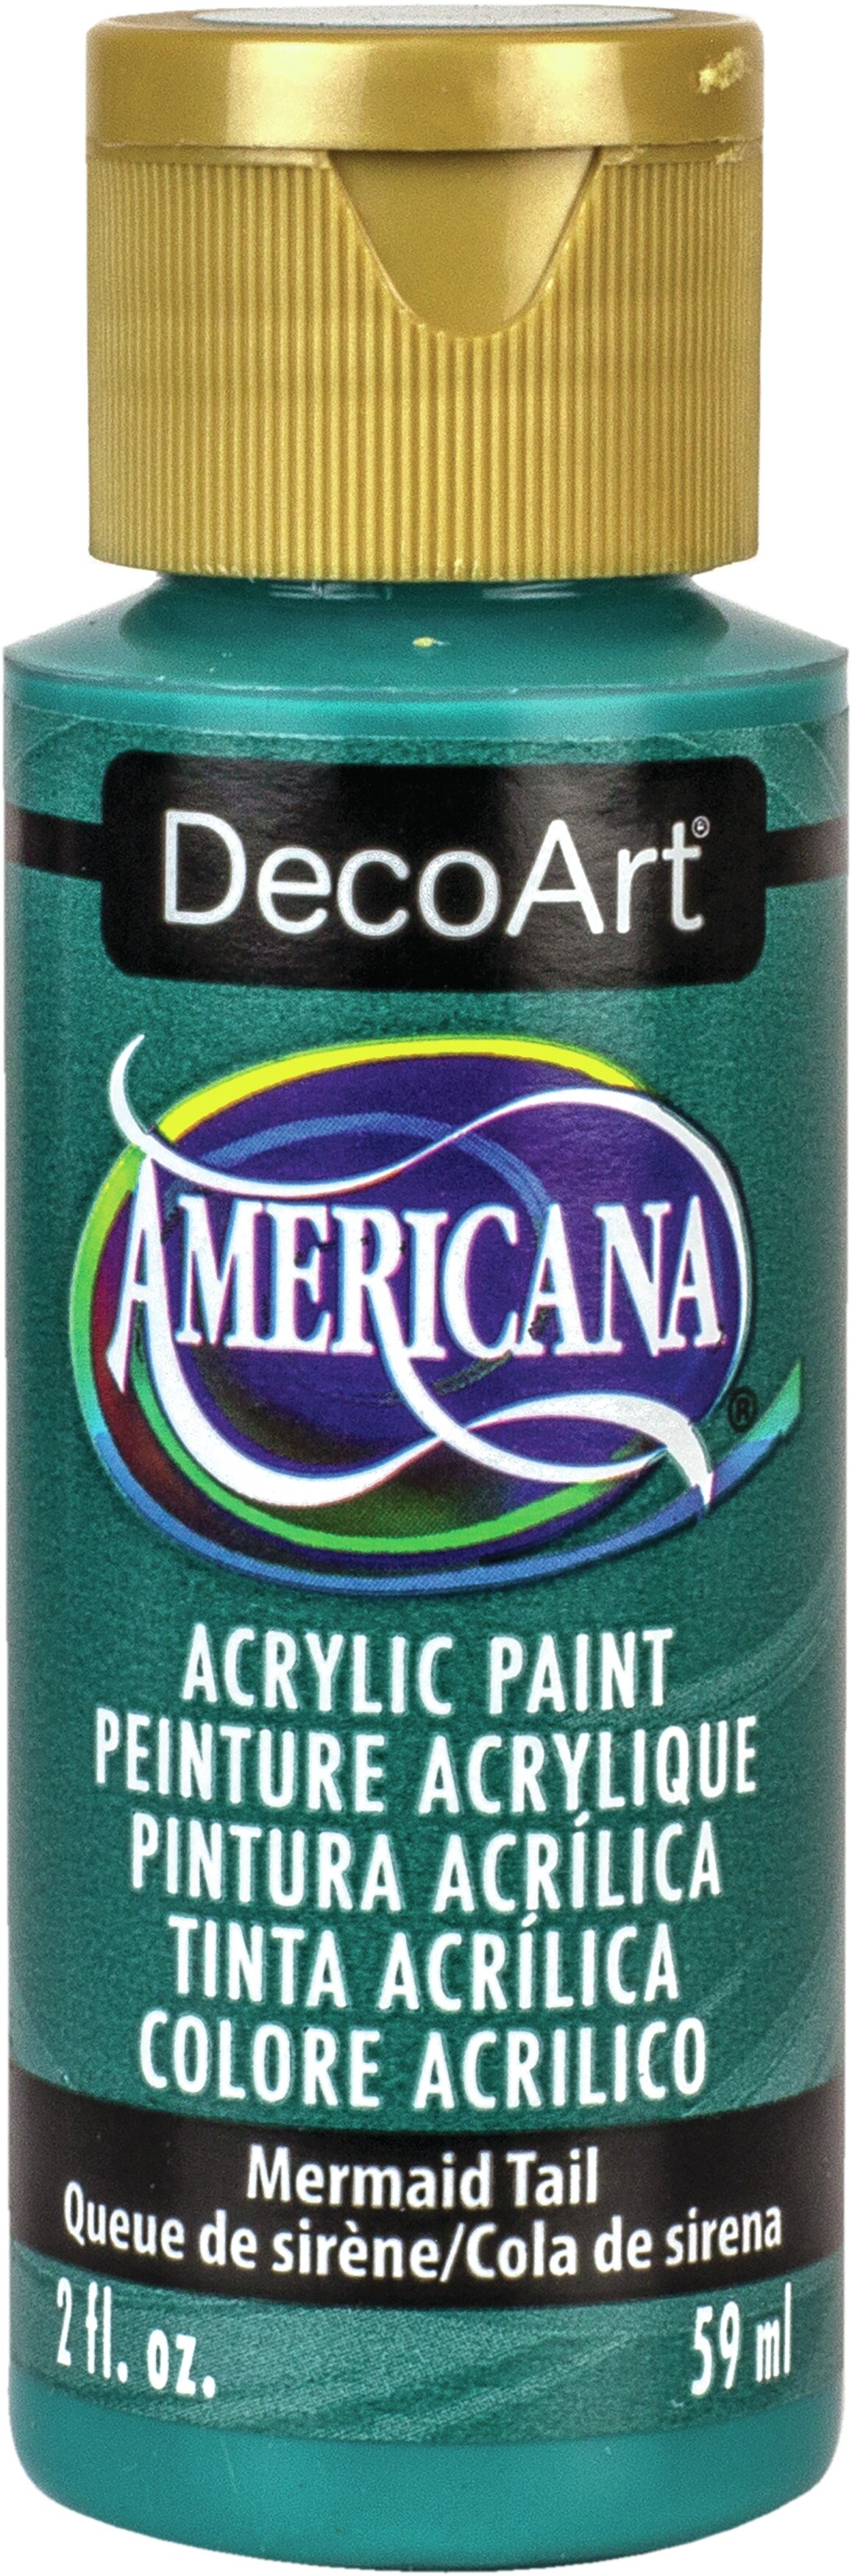 DecoArt Americana Acrylic Paint 2oz-Mermaid Tail